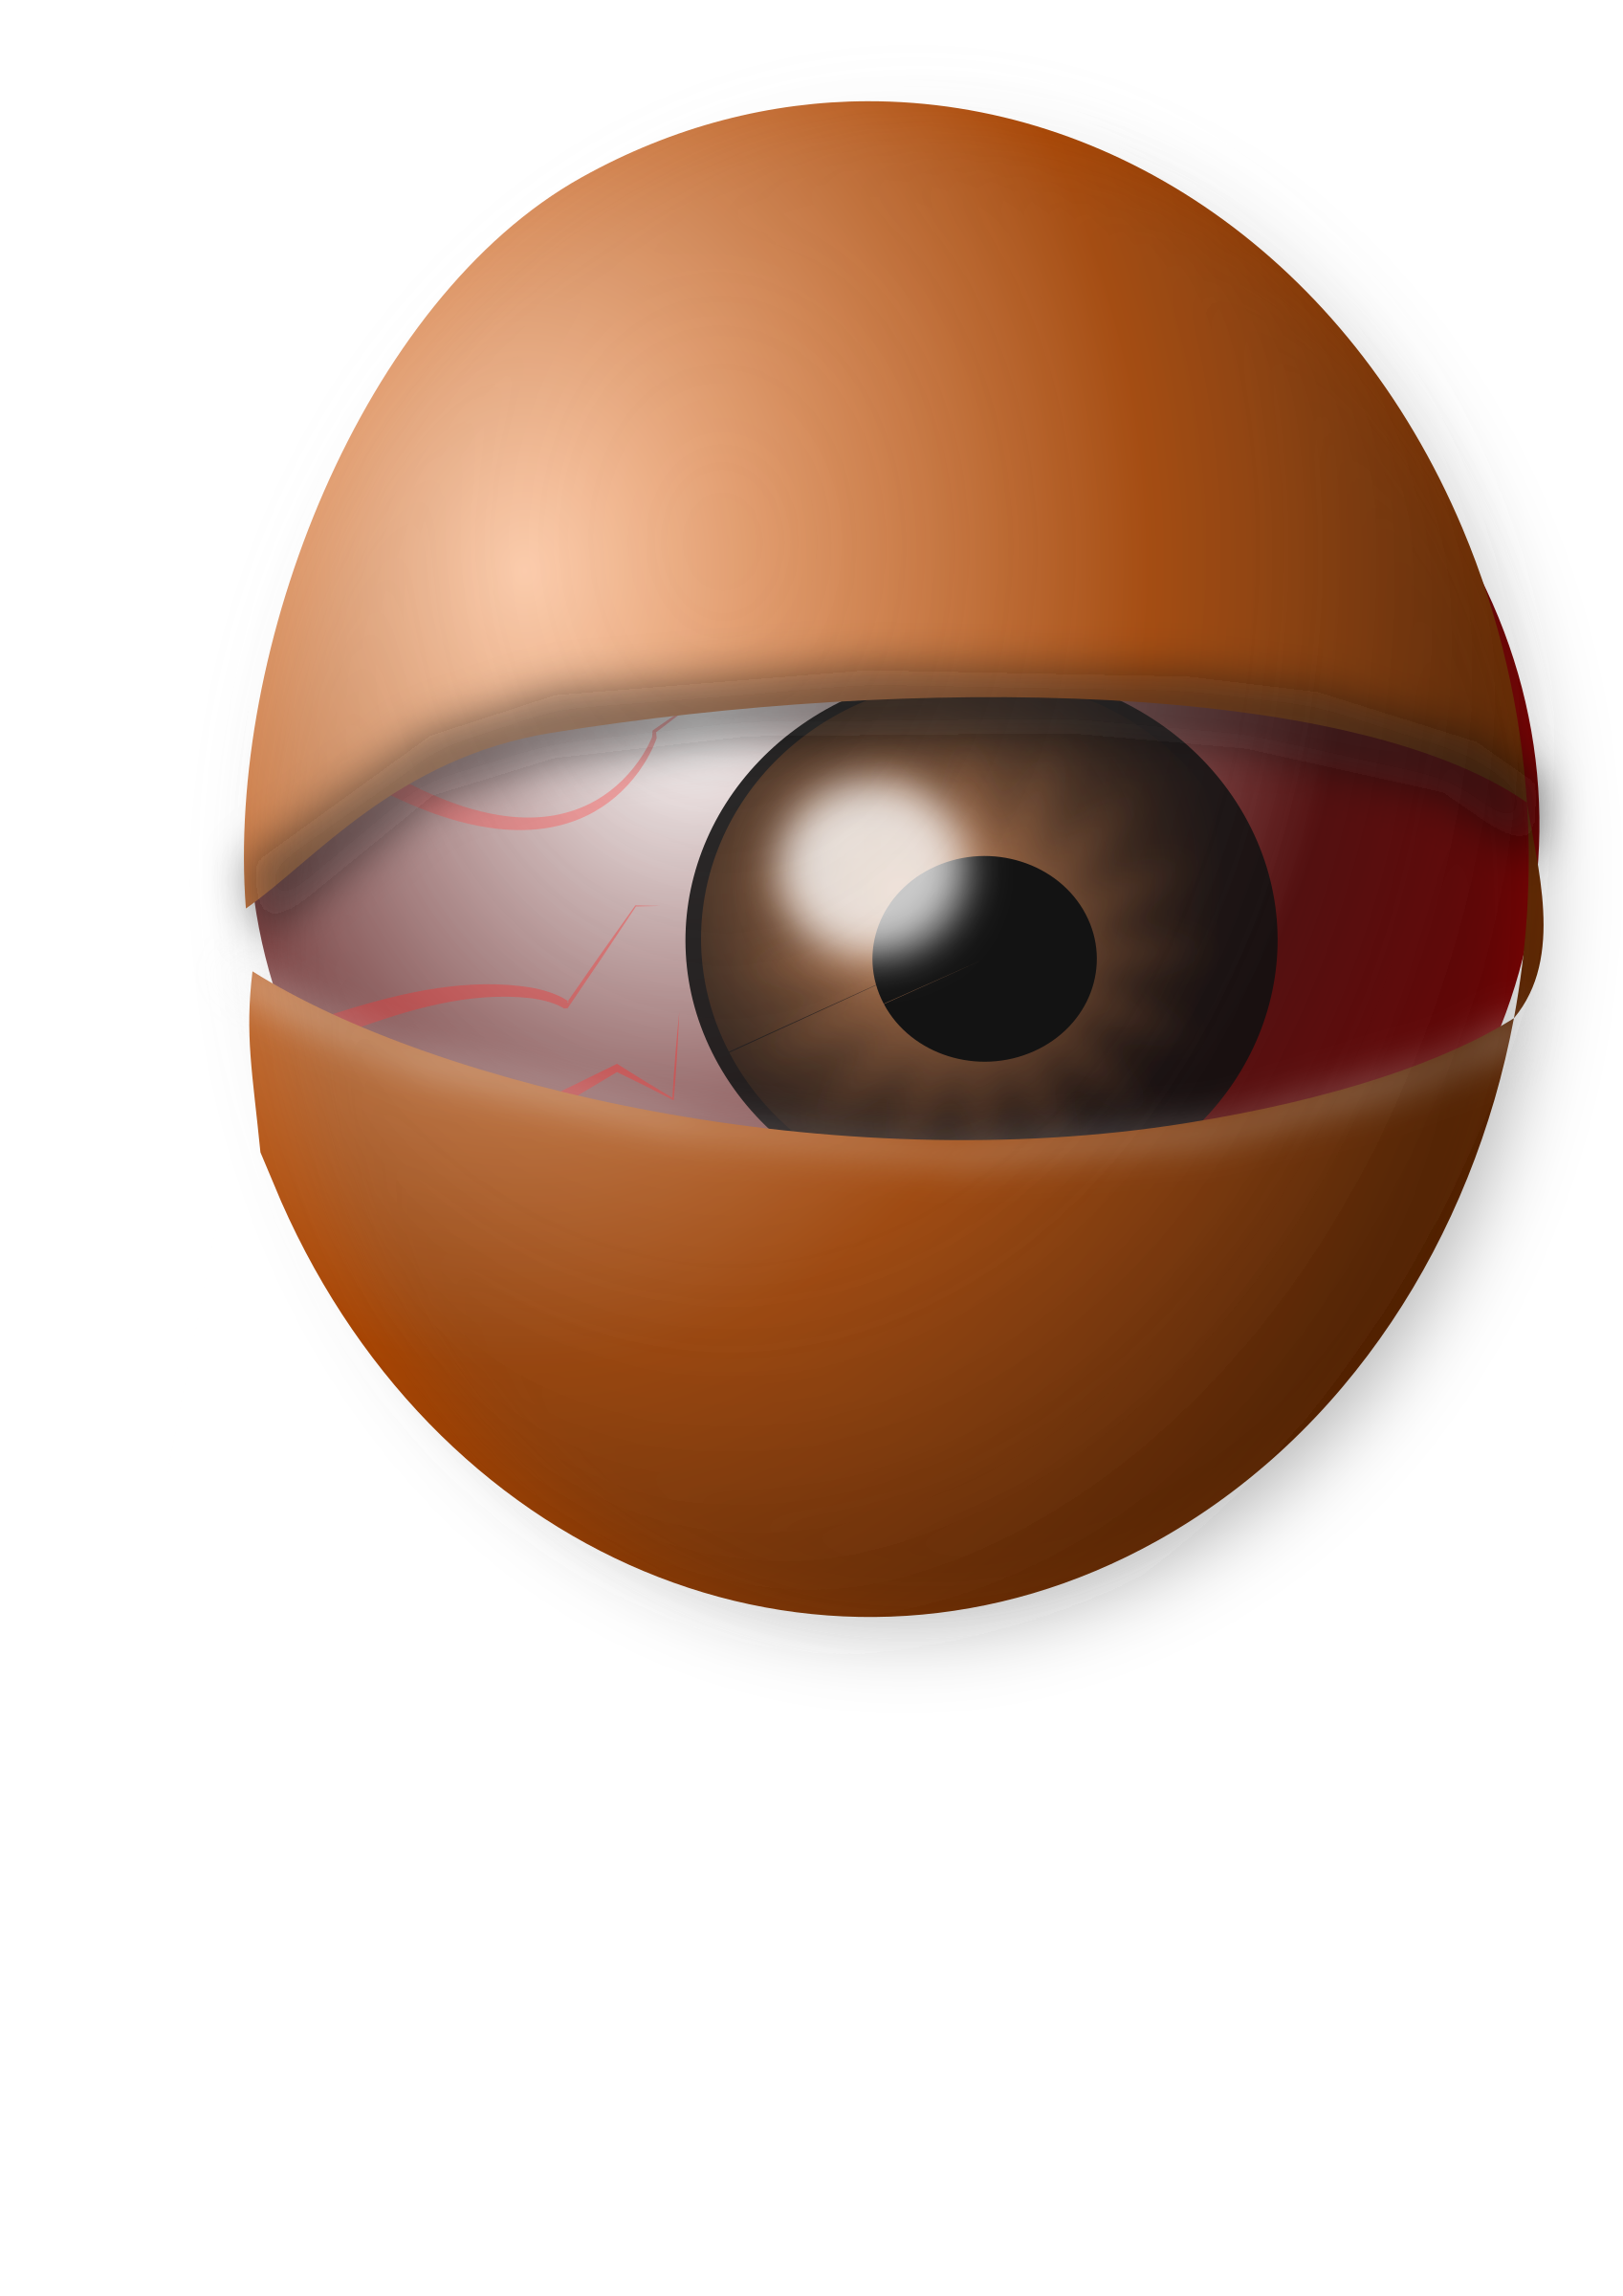 Am Eyeball Egg By Amprosoftdesign